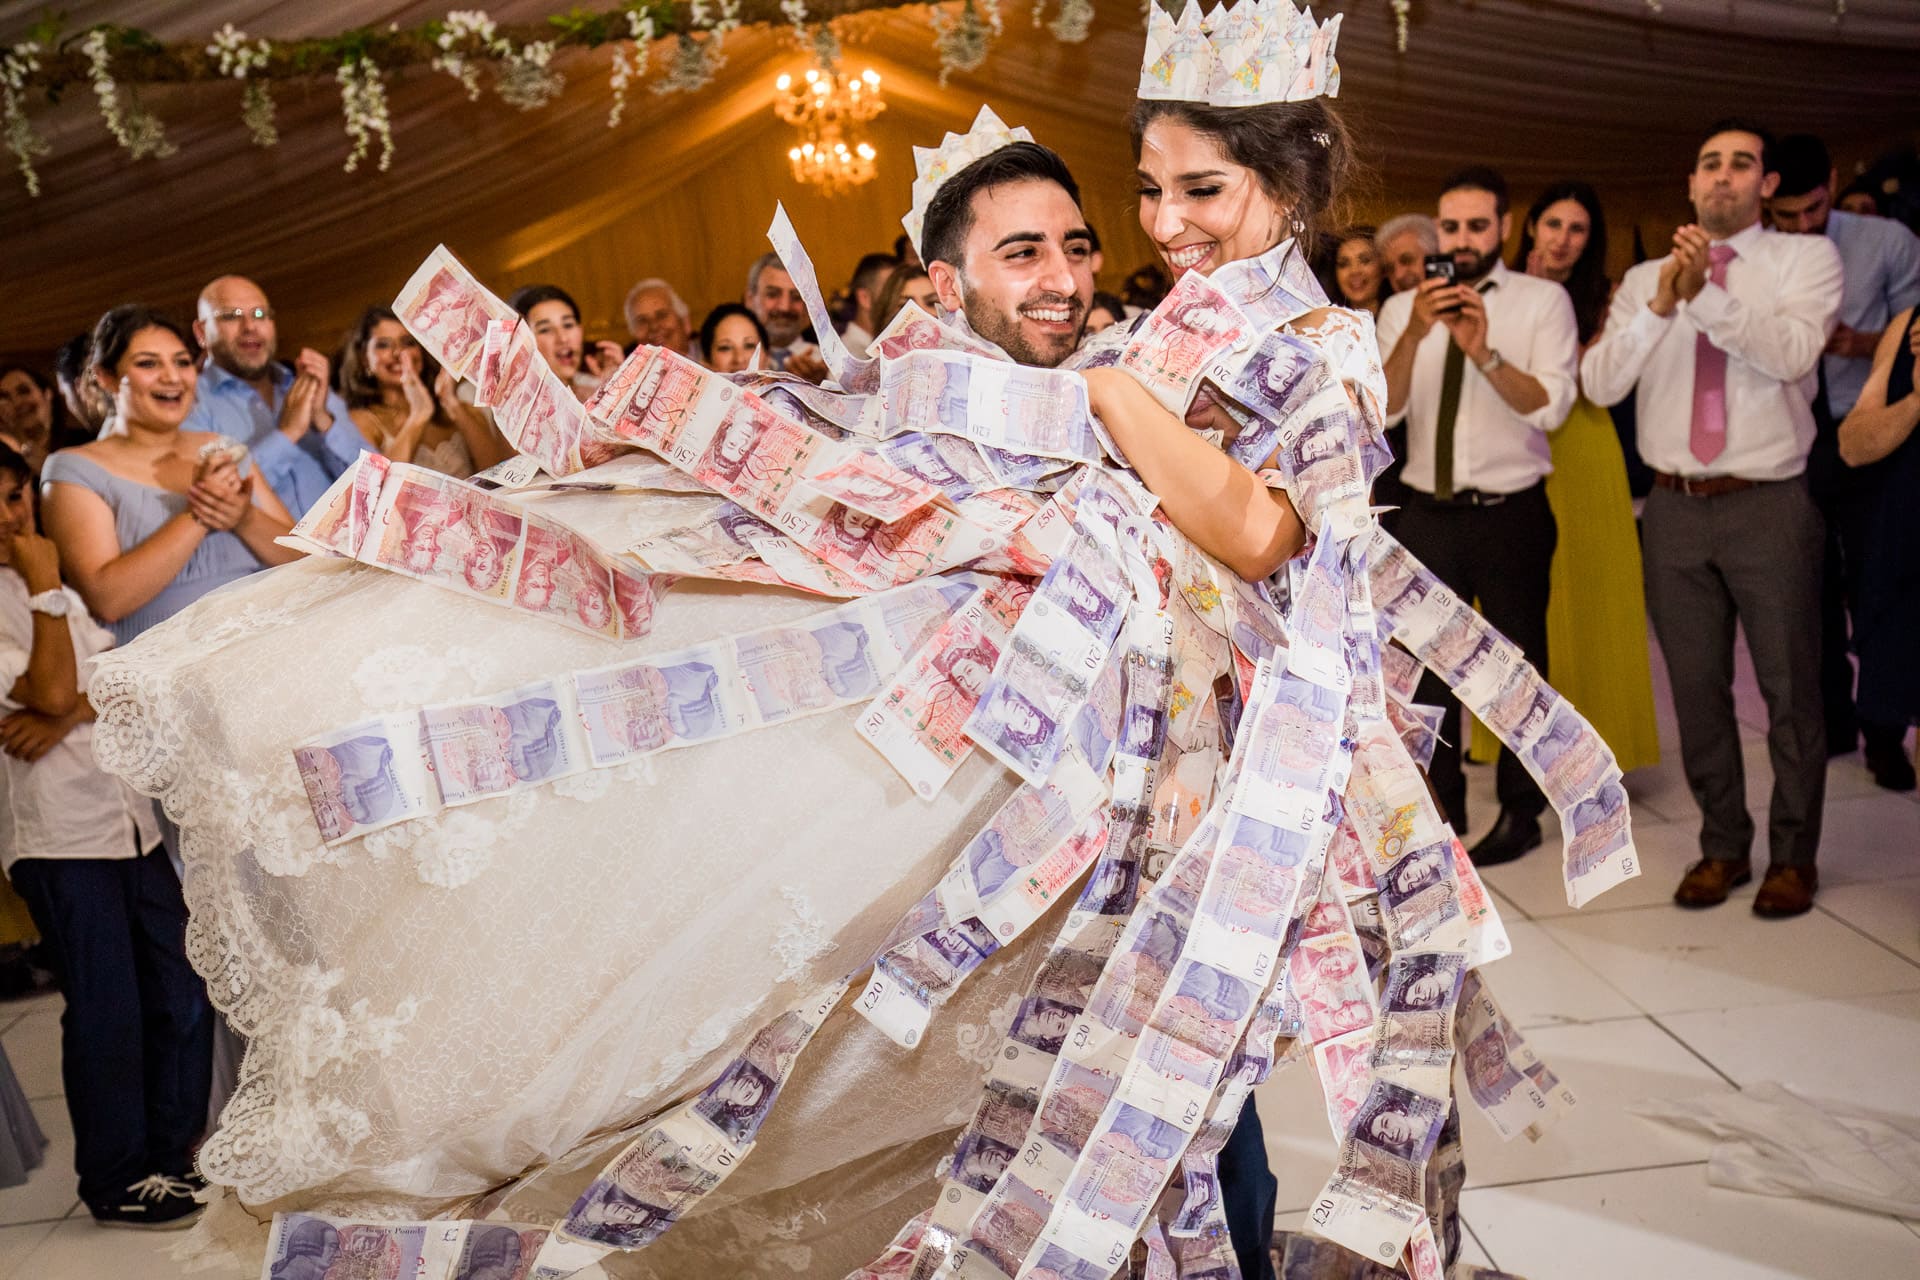 Greek money dance photo